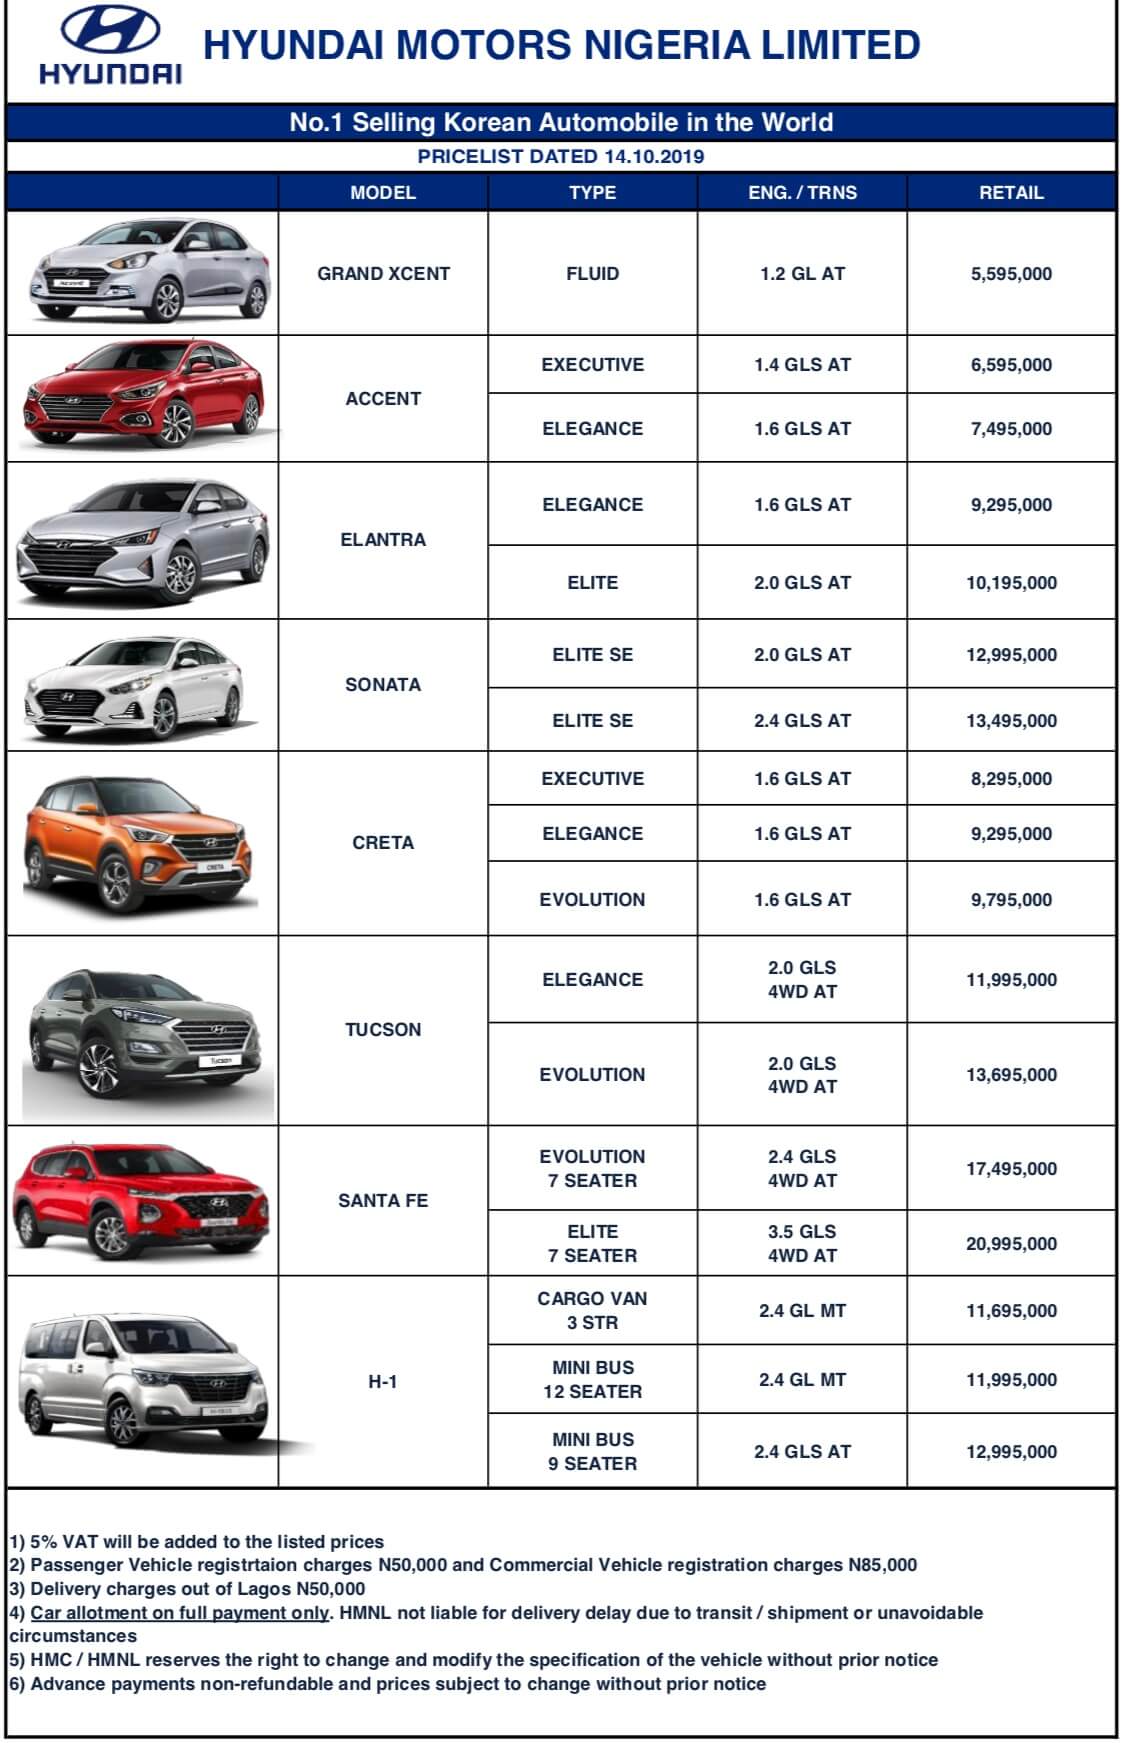  Price  List  Of Hyundai  Cars Car Talk Nigeria